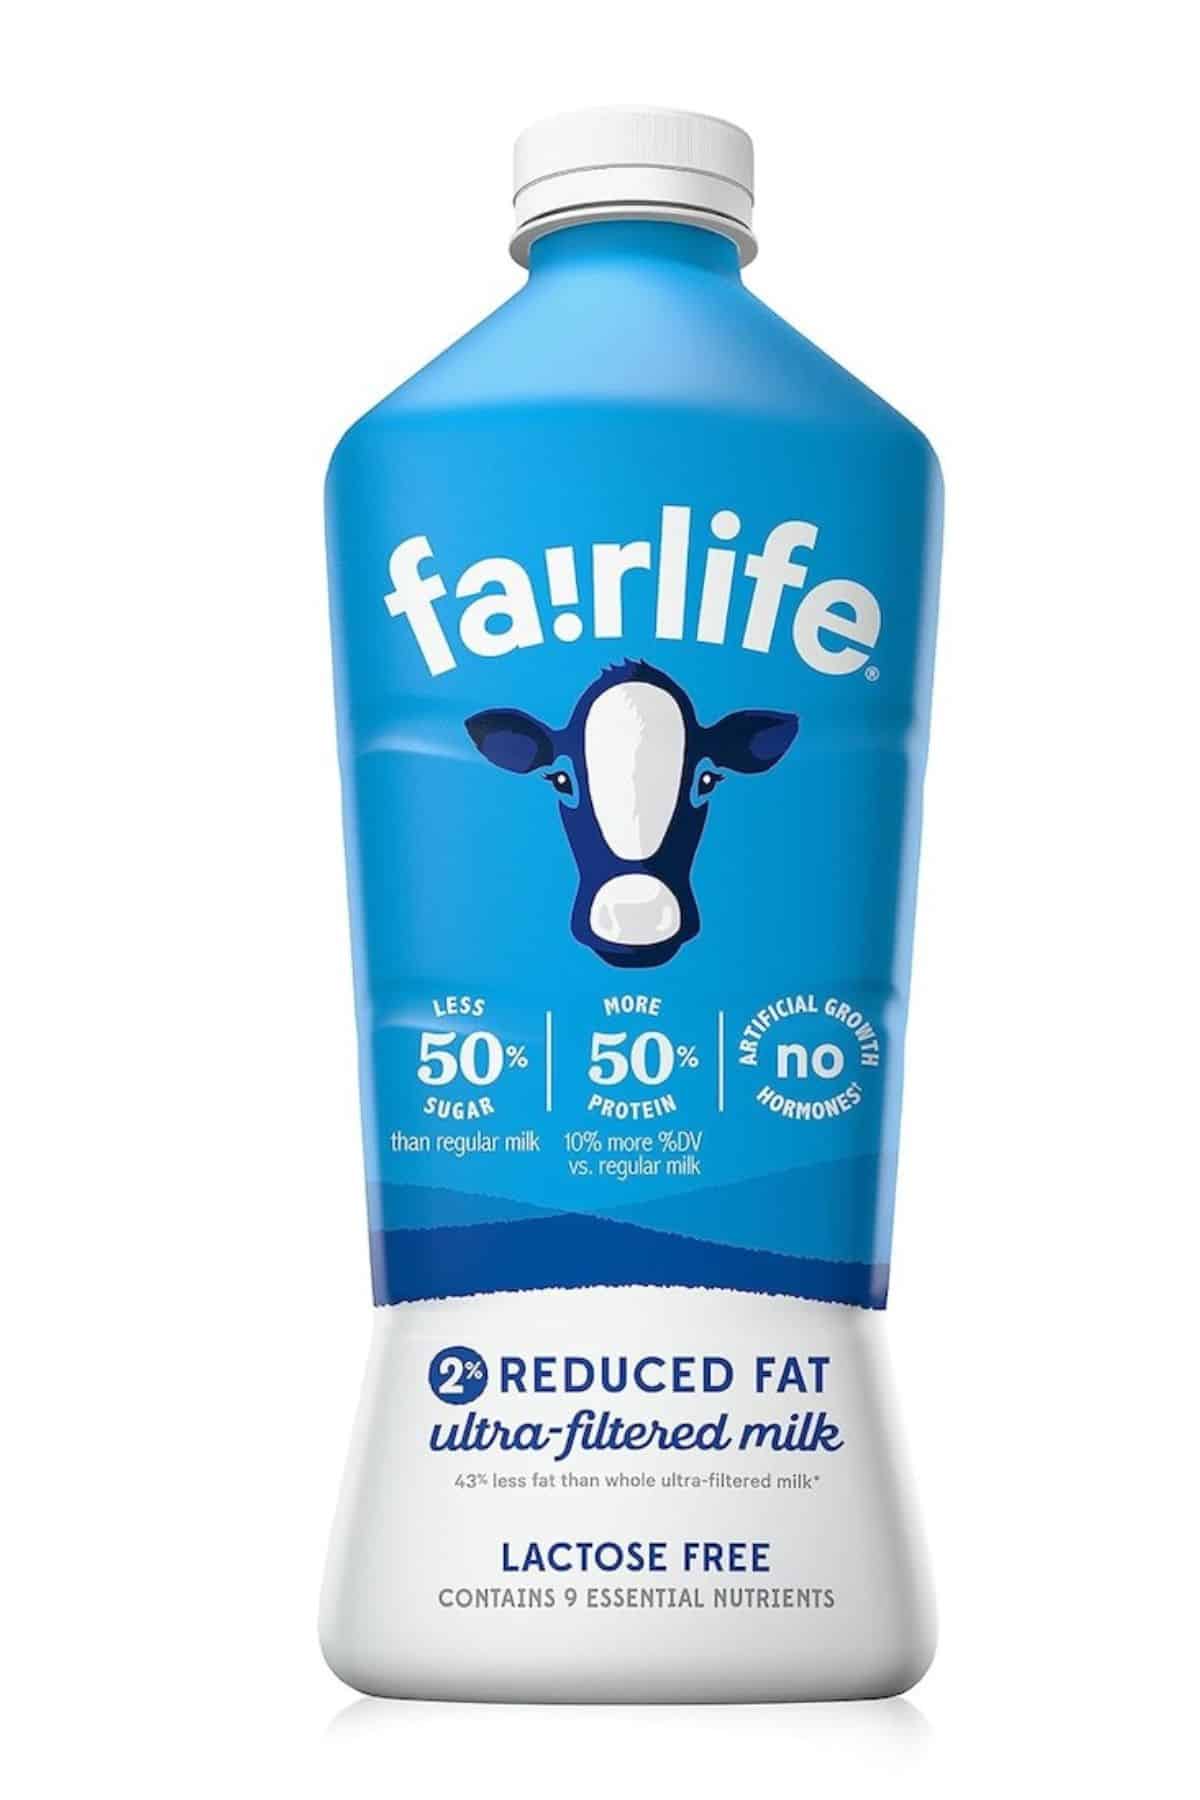 a jug of Fairlife milk.